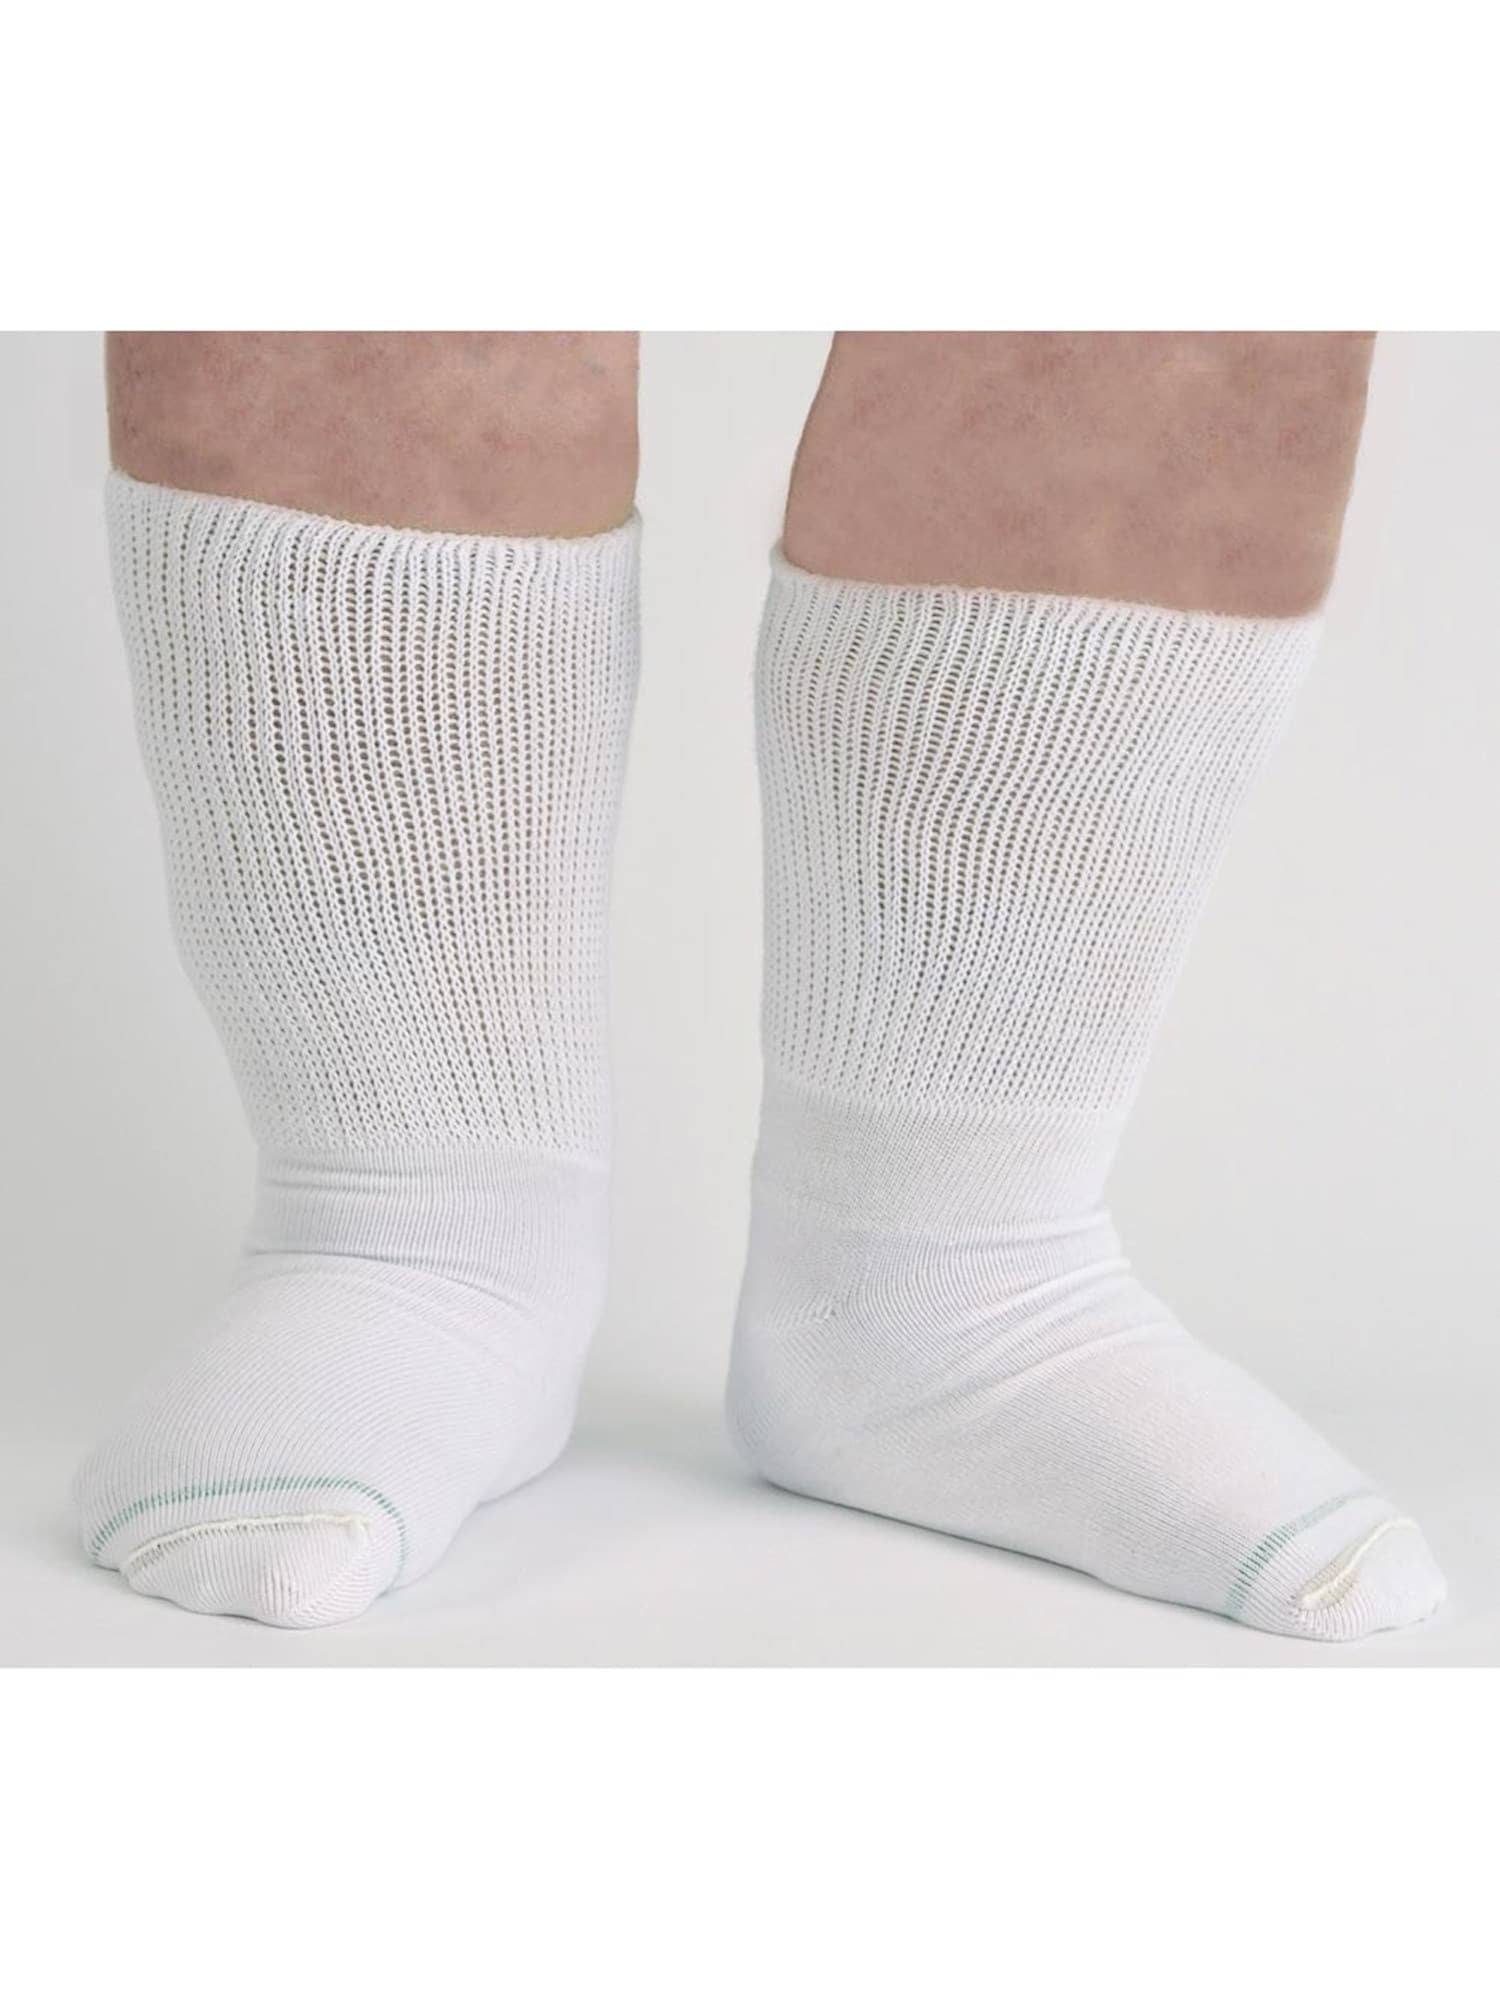 Men's Large Extra Wide Sock Mens Bariatric Diabetic Crew Socks Shoe Sizes 11-16 